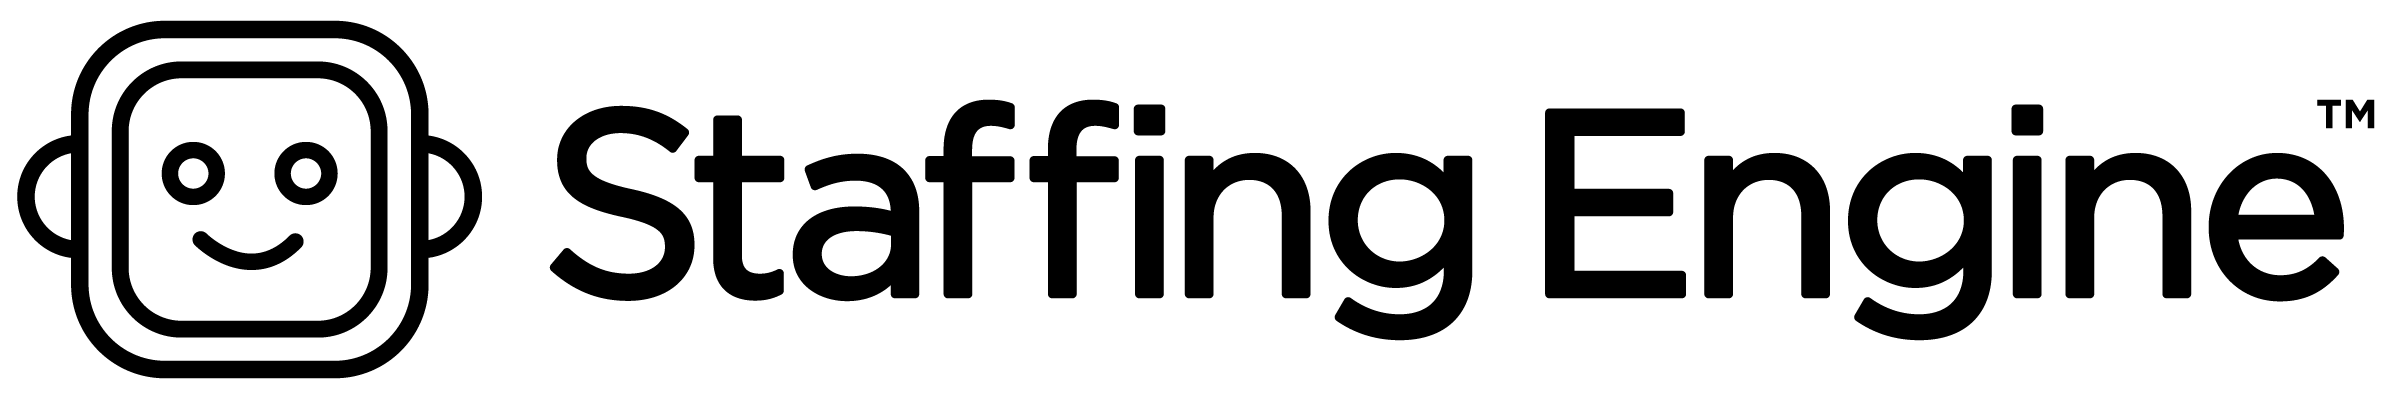 StaffingEngine-Logo-black